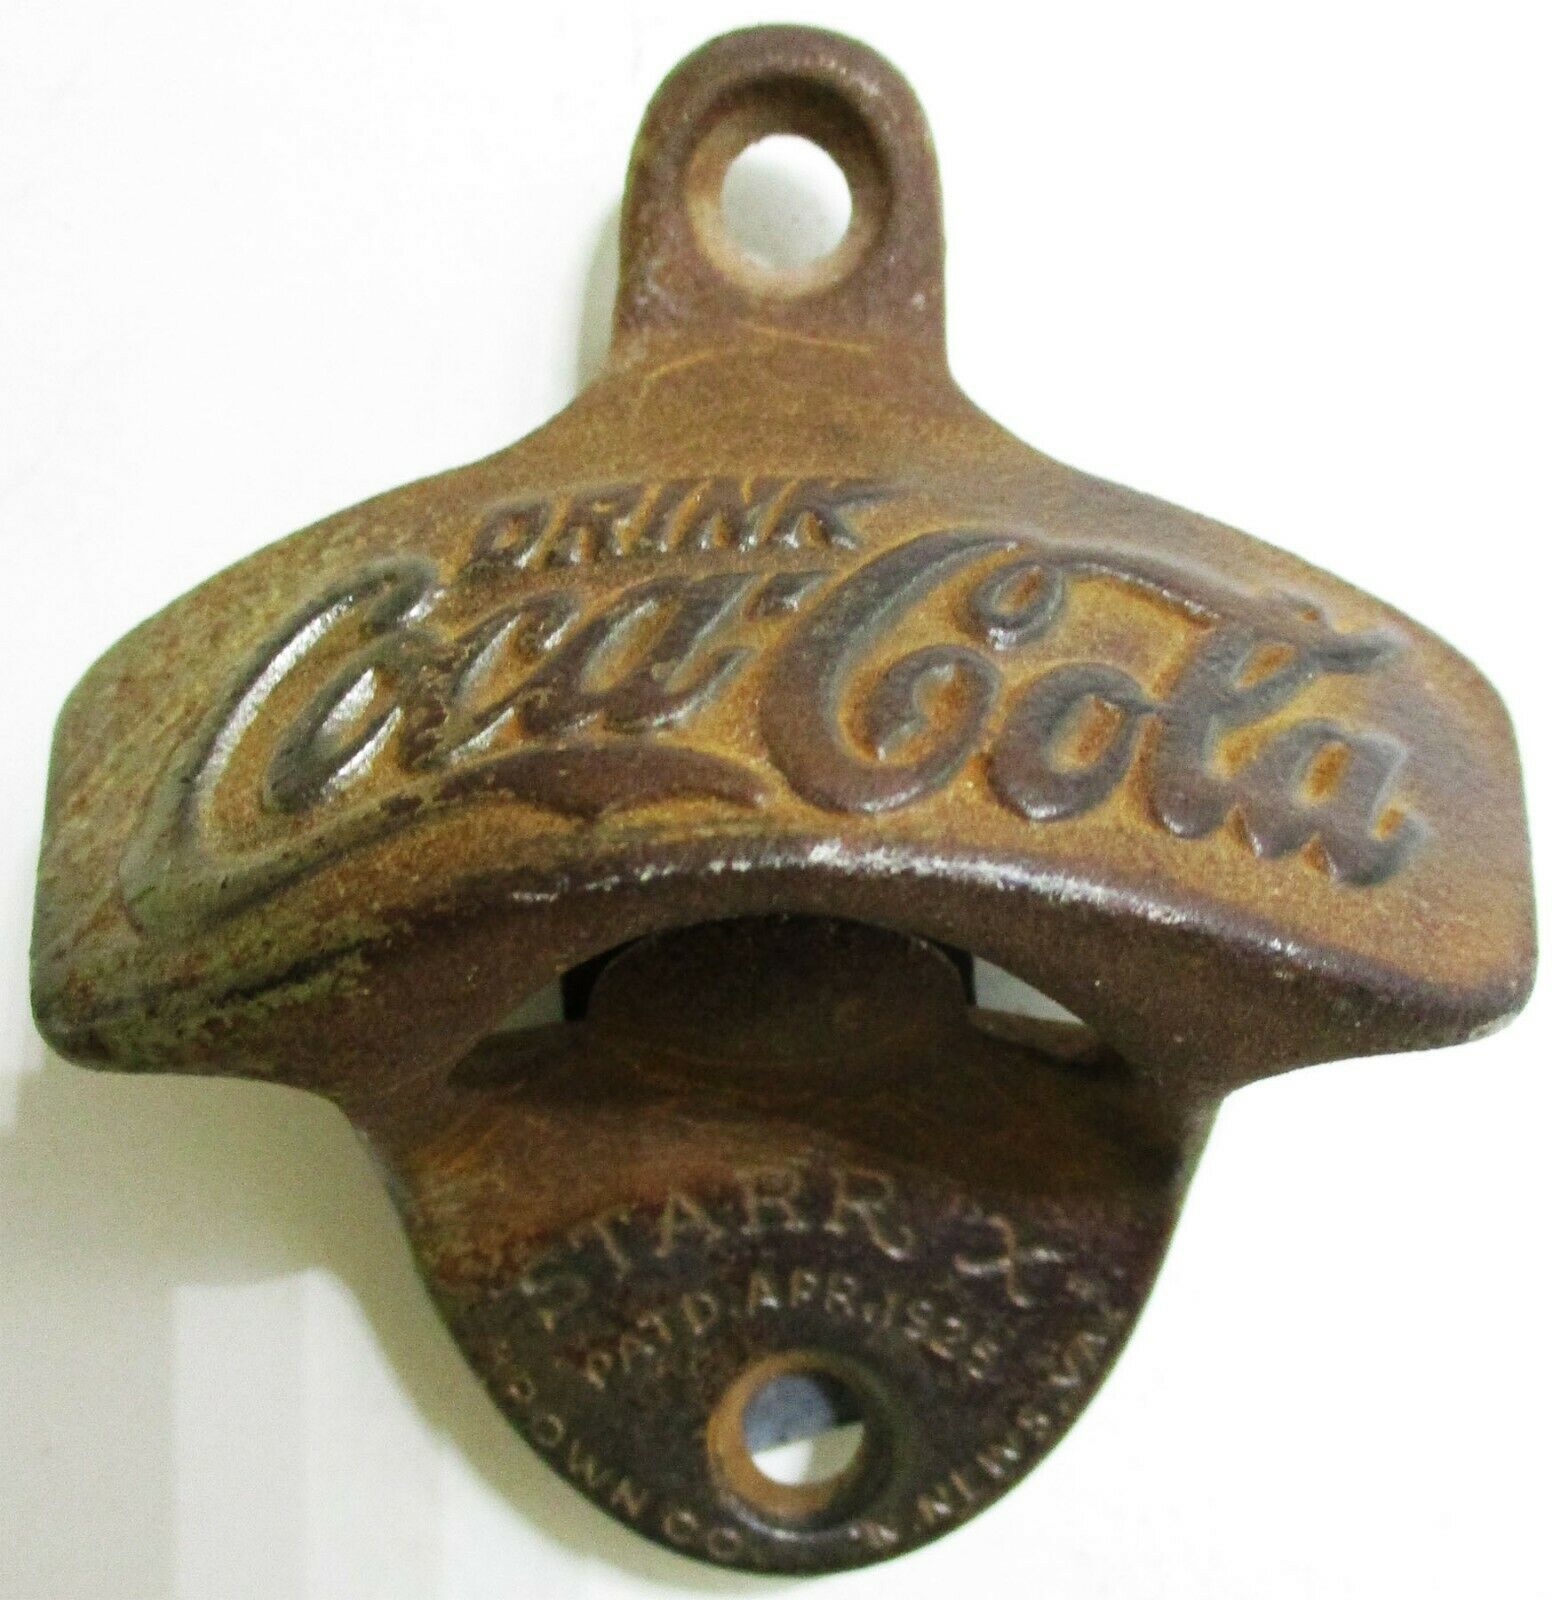 Cast Iron Coca Cola Bottle Opener Coke Pop Soda Vintage Style Kitchen Silver Red